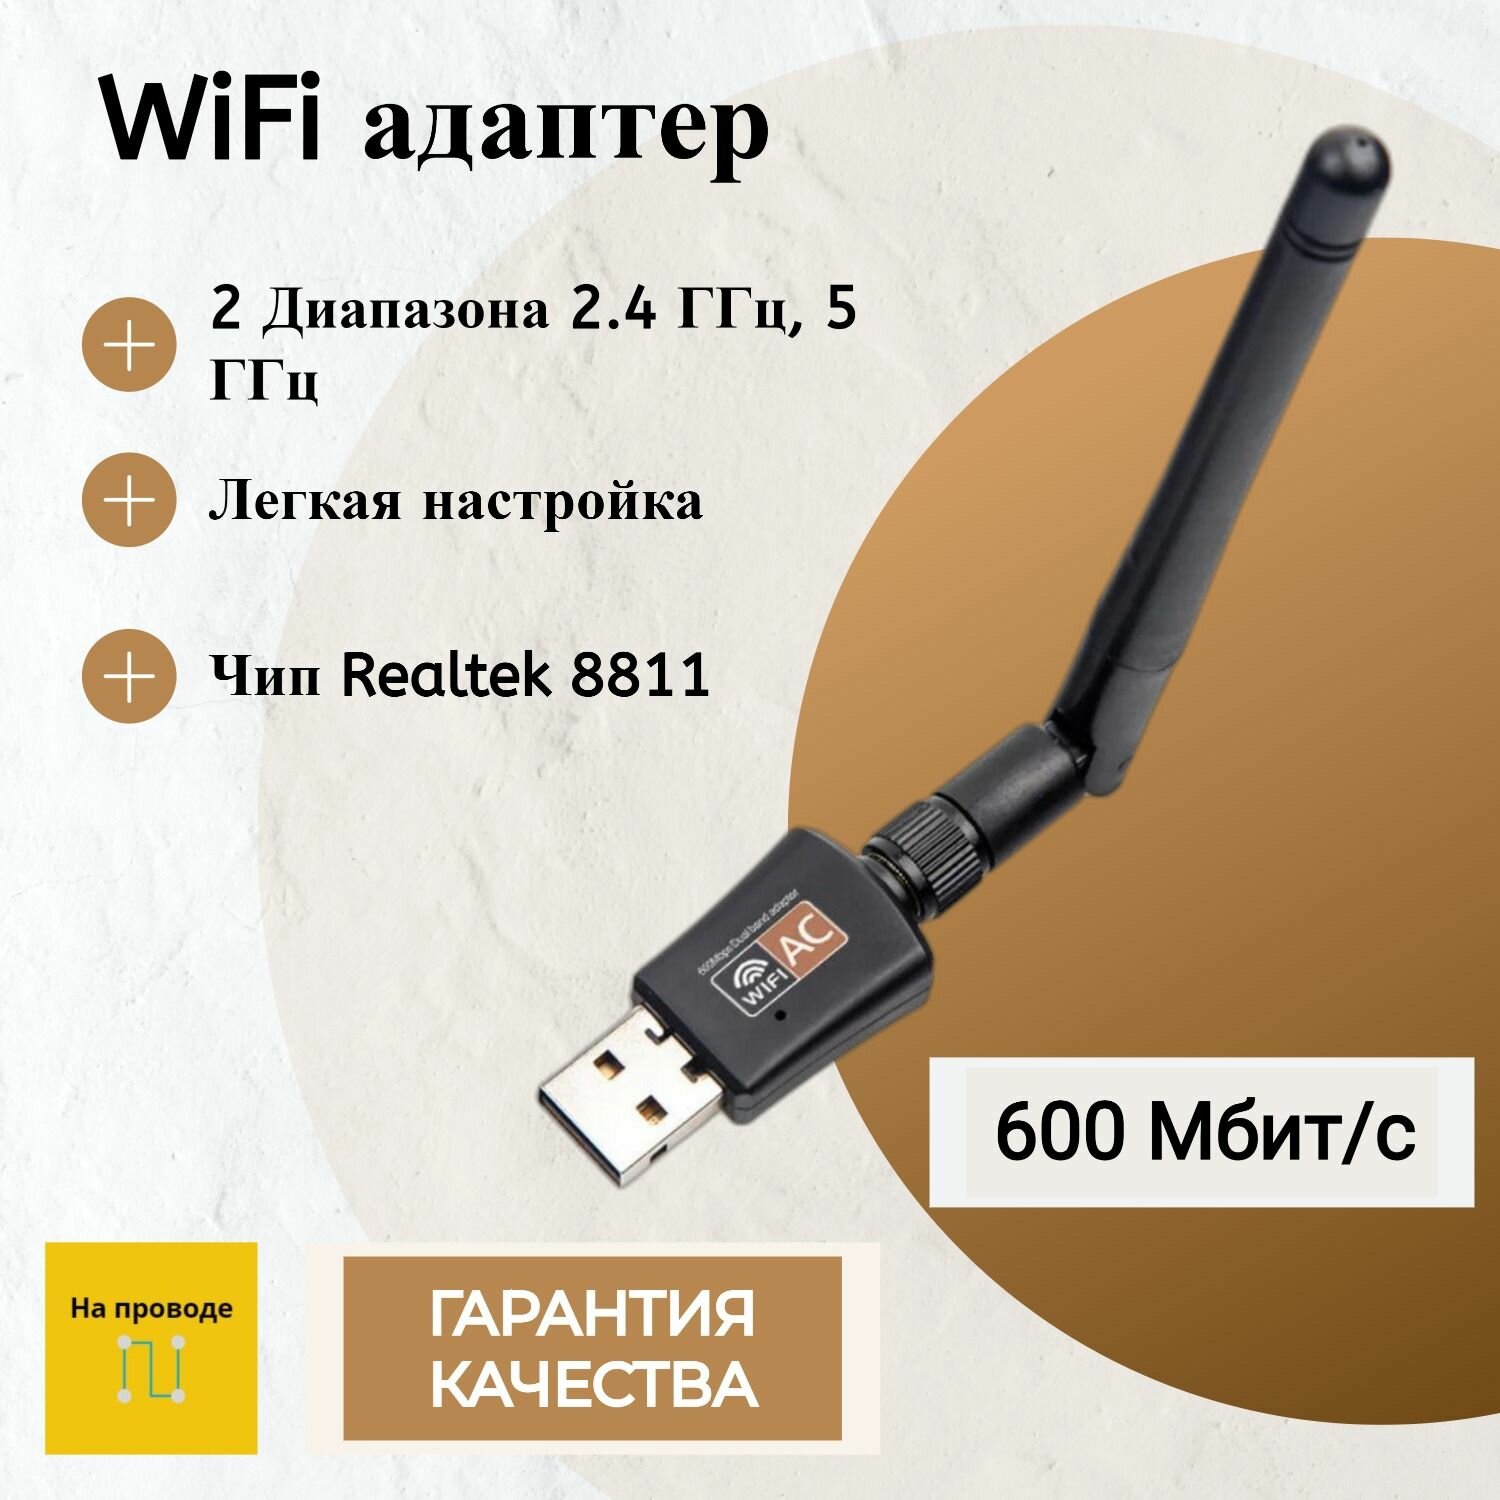 WiFi адаптер для компьютера пк USB с антенной двухдиапазонный 600Mbps 2.4GHz + 5GHz